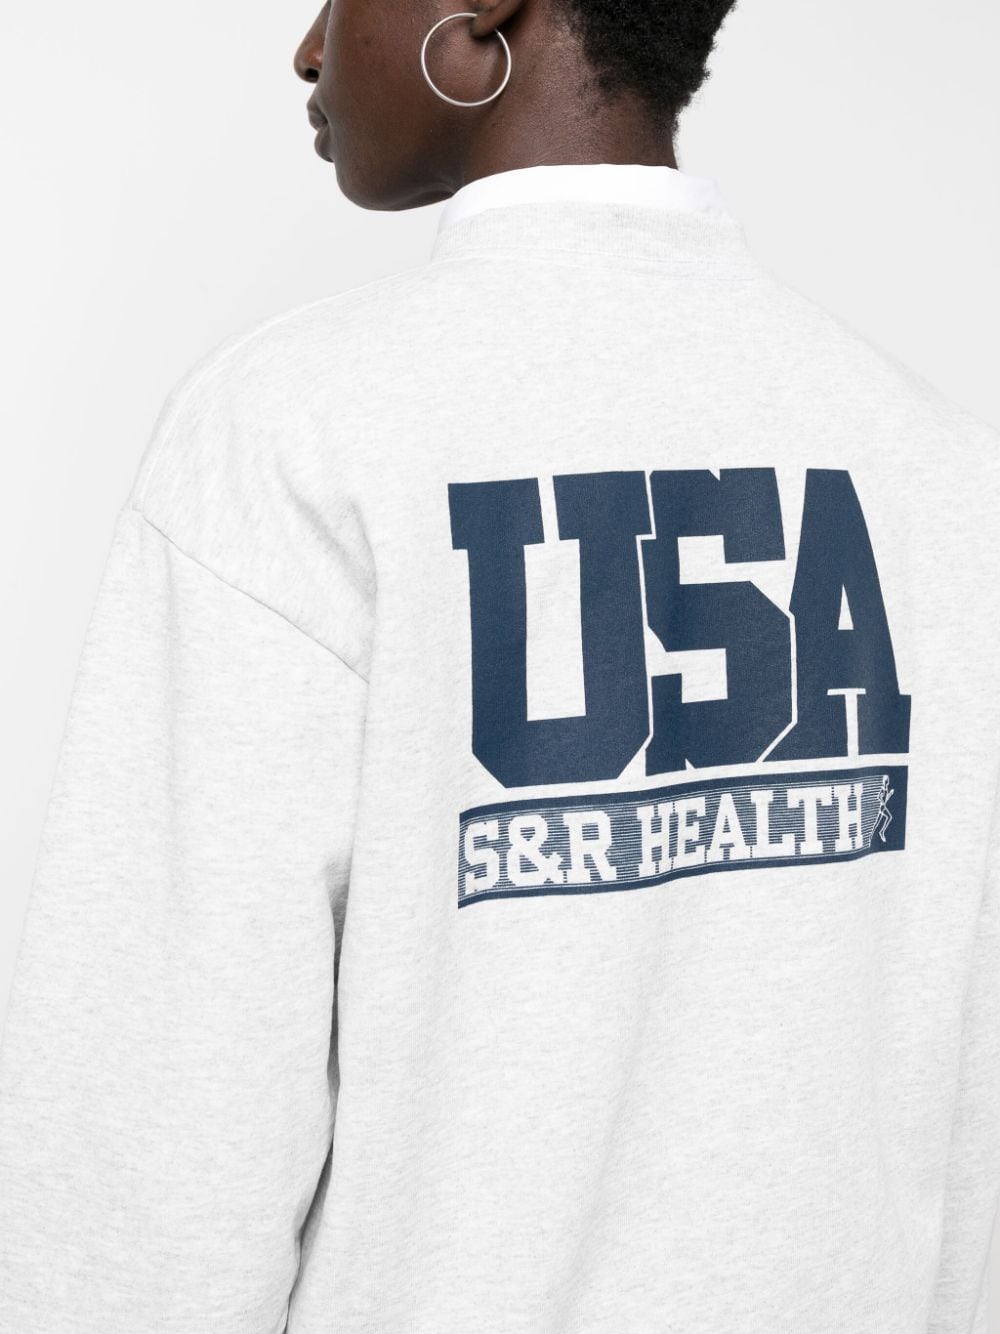 Team USA sweatshirt